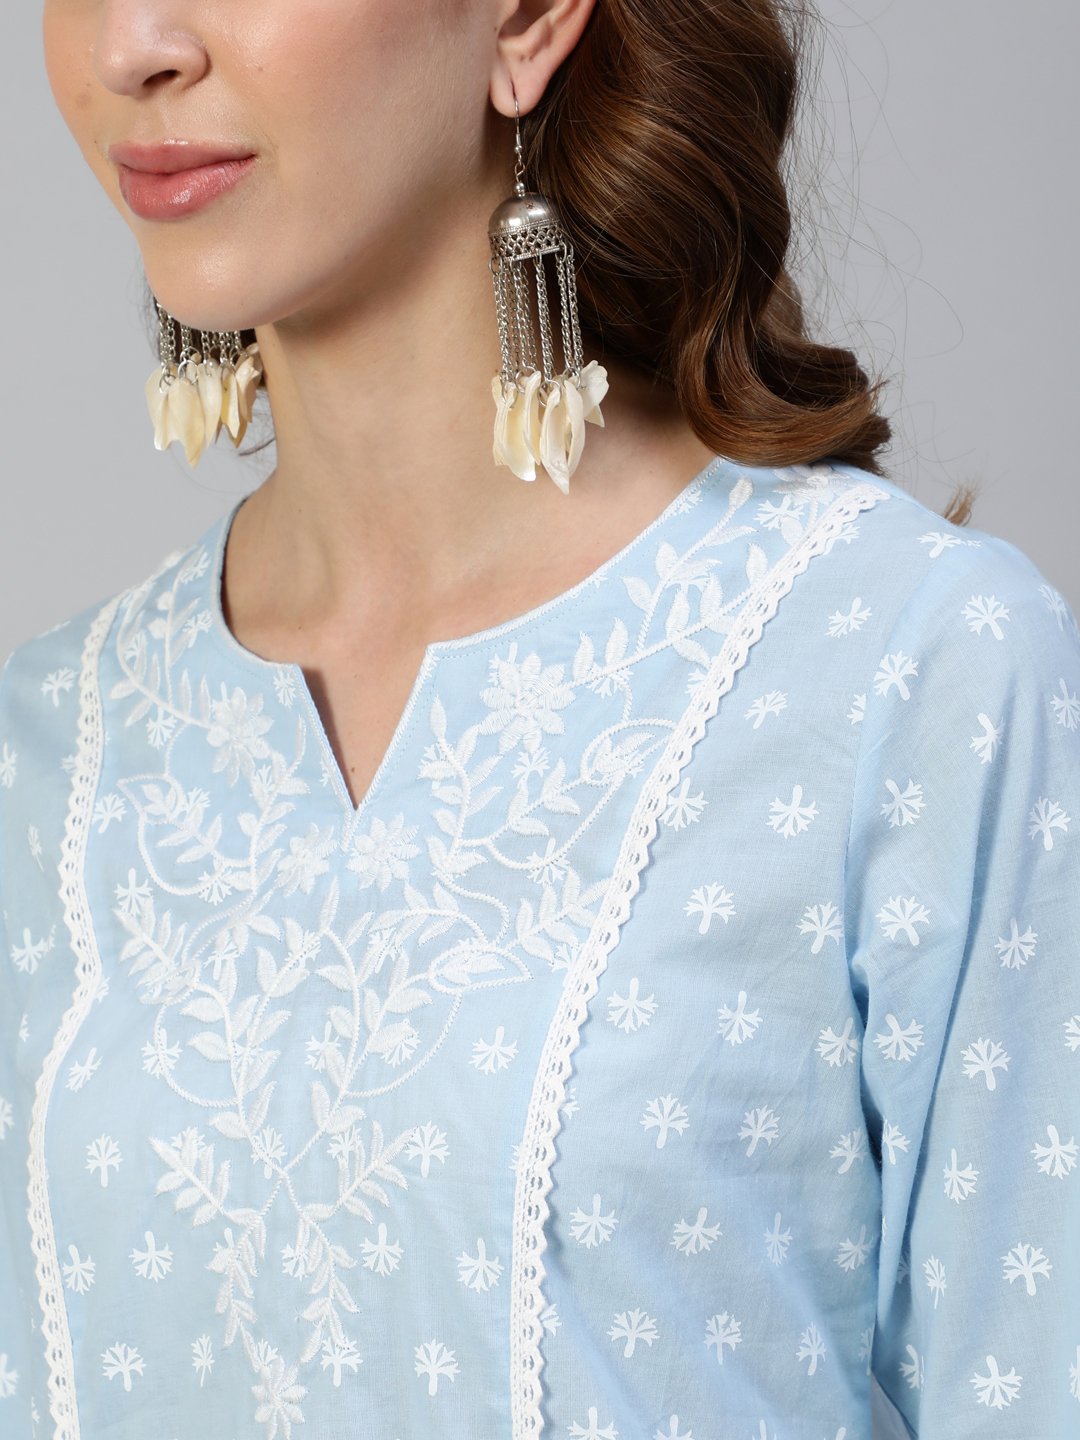 Ishin Women's Cotton Blue Embroidered A-Line Kurta